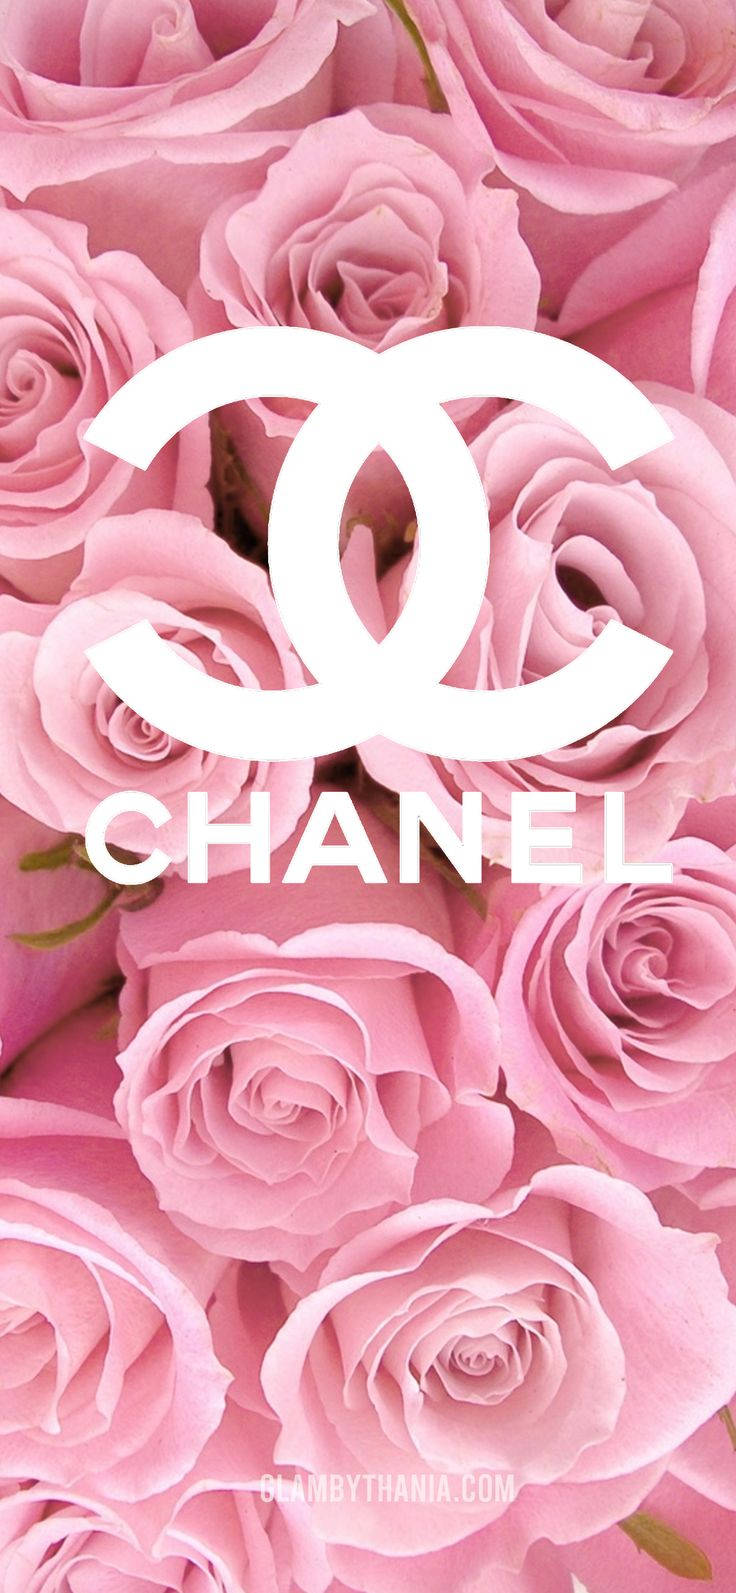 Chanel Roser Girly Iphone Wallpaper